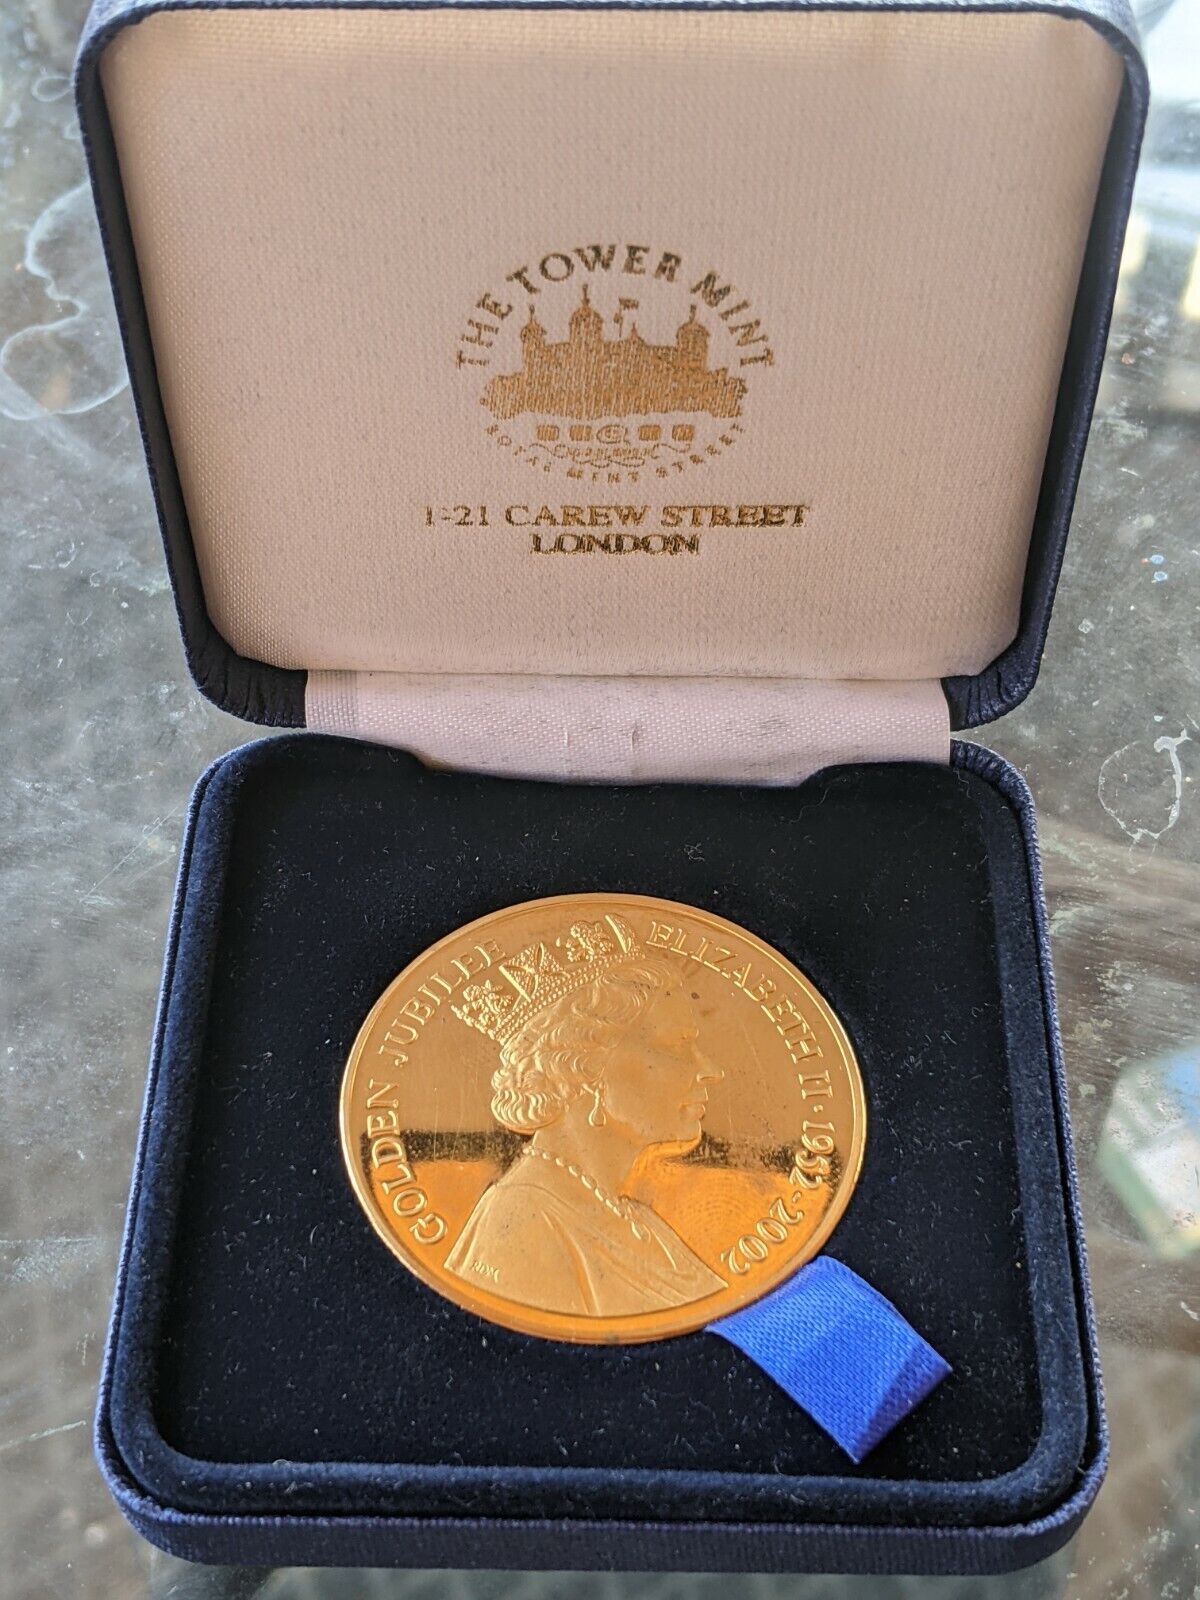 Golden Jubilee Elizabeth II 1952-2002 commemorative medallion